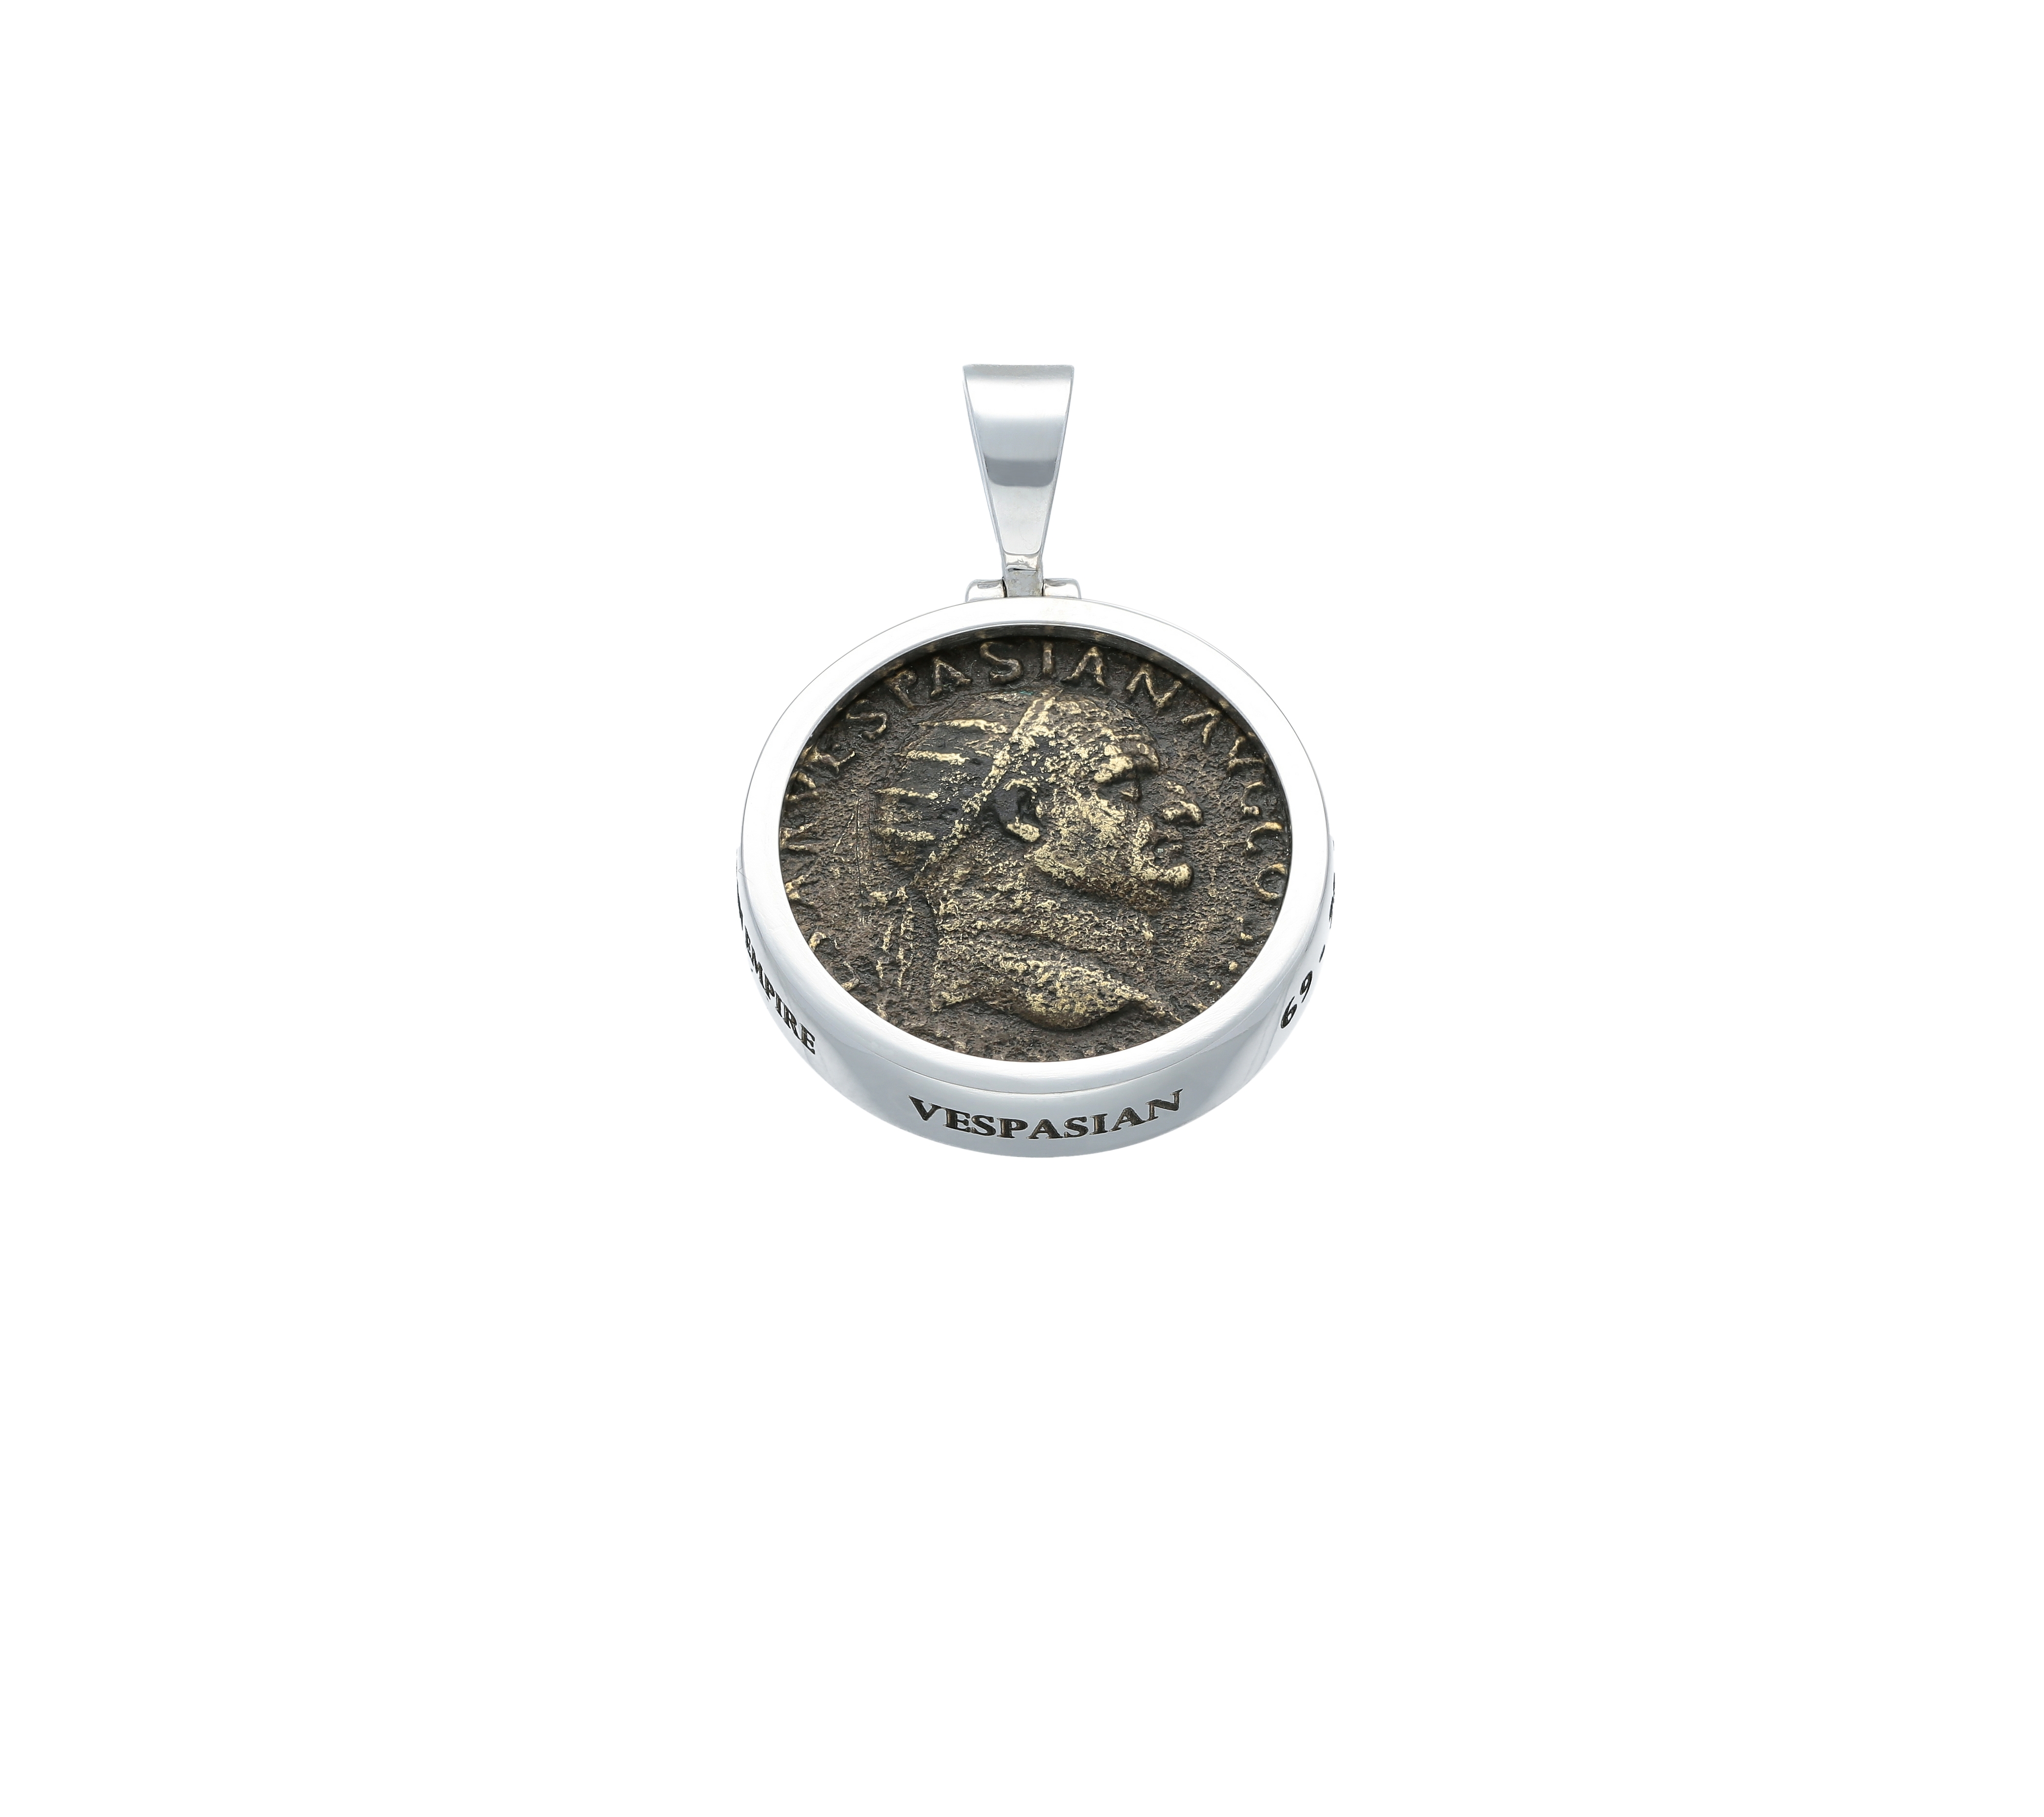 Roman Coin Emperor Vespasian in 18kt white gold